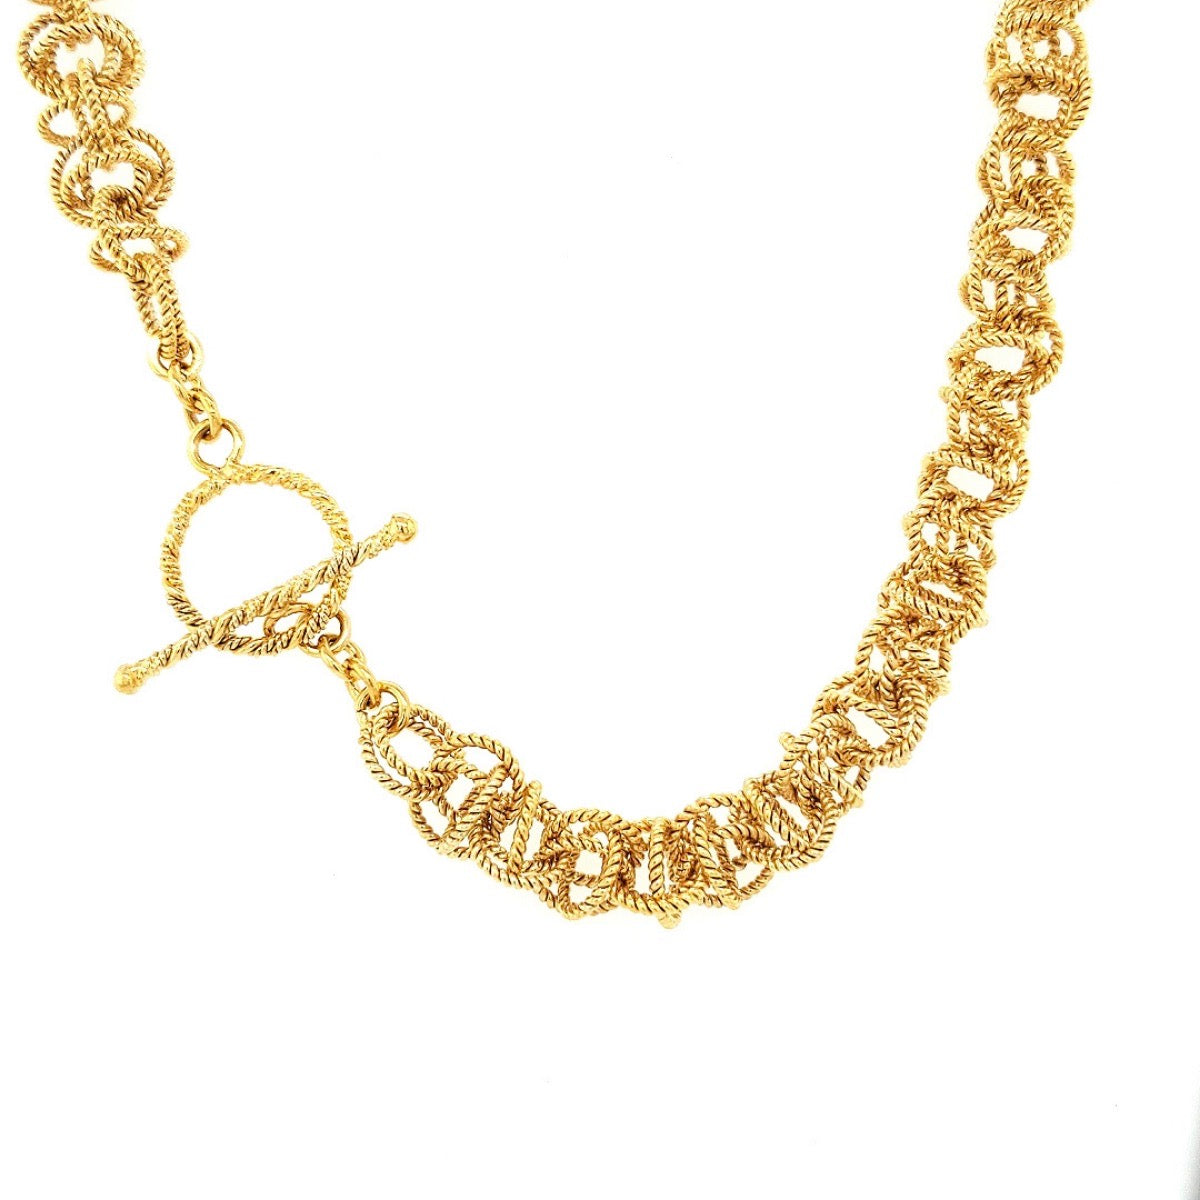 19.5" Gold Vermeil 10mm Saturn Necklace / Closeup Clasp & Chain white background / Arpaia Lang